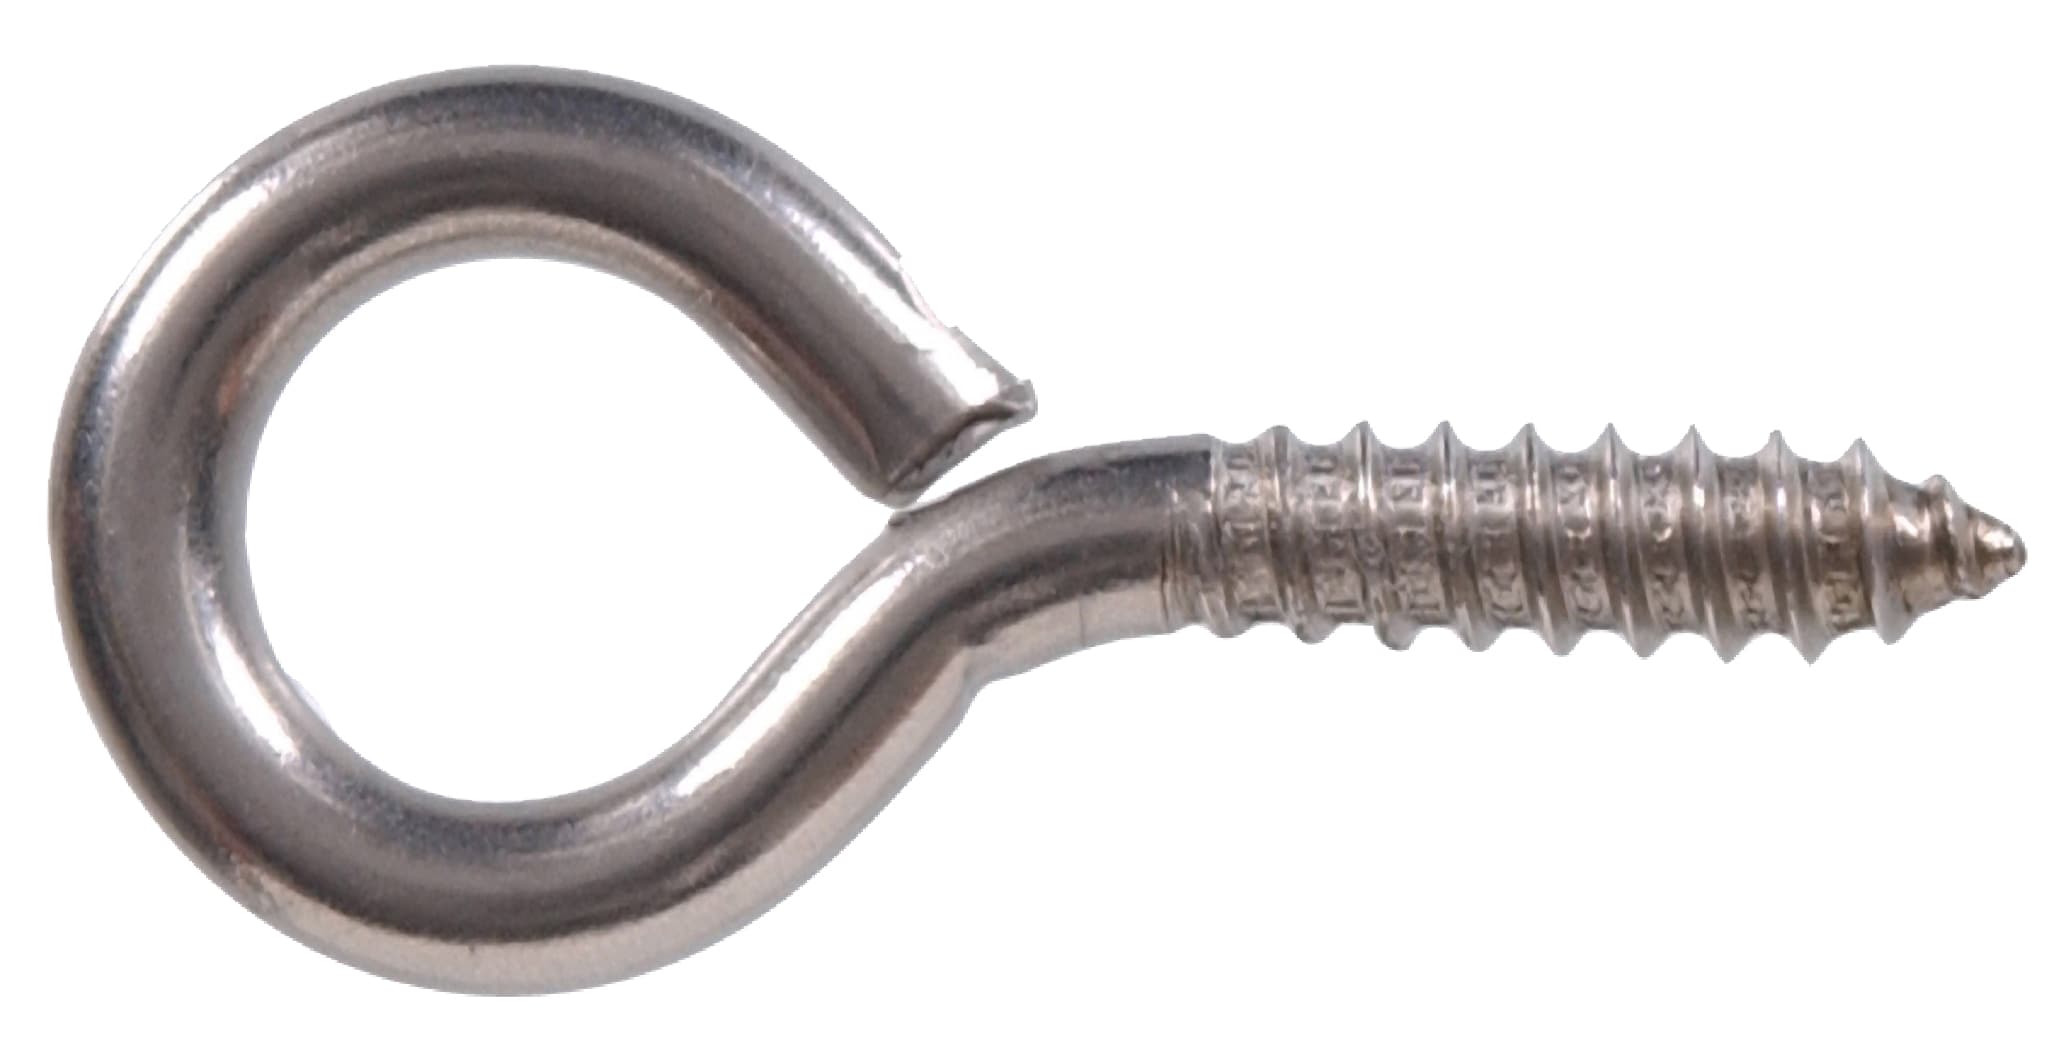 Hillman Stainless Steel Screw Eye Hook (3-Pack) at